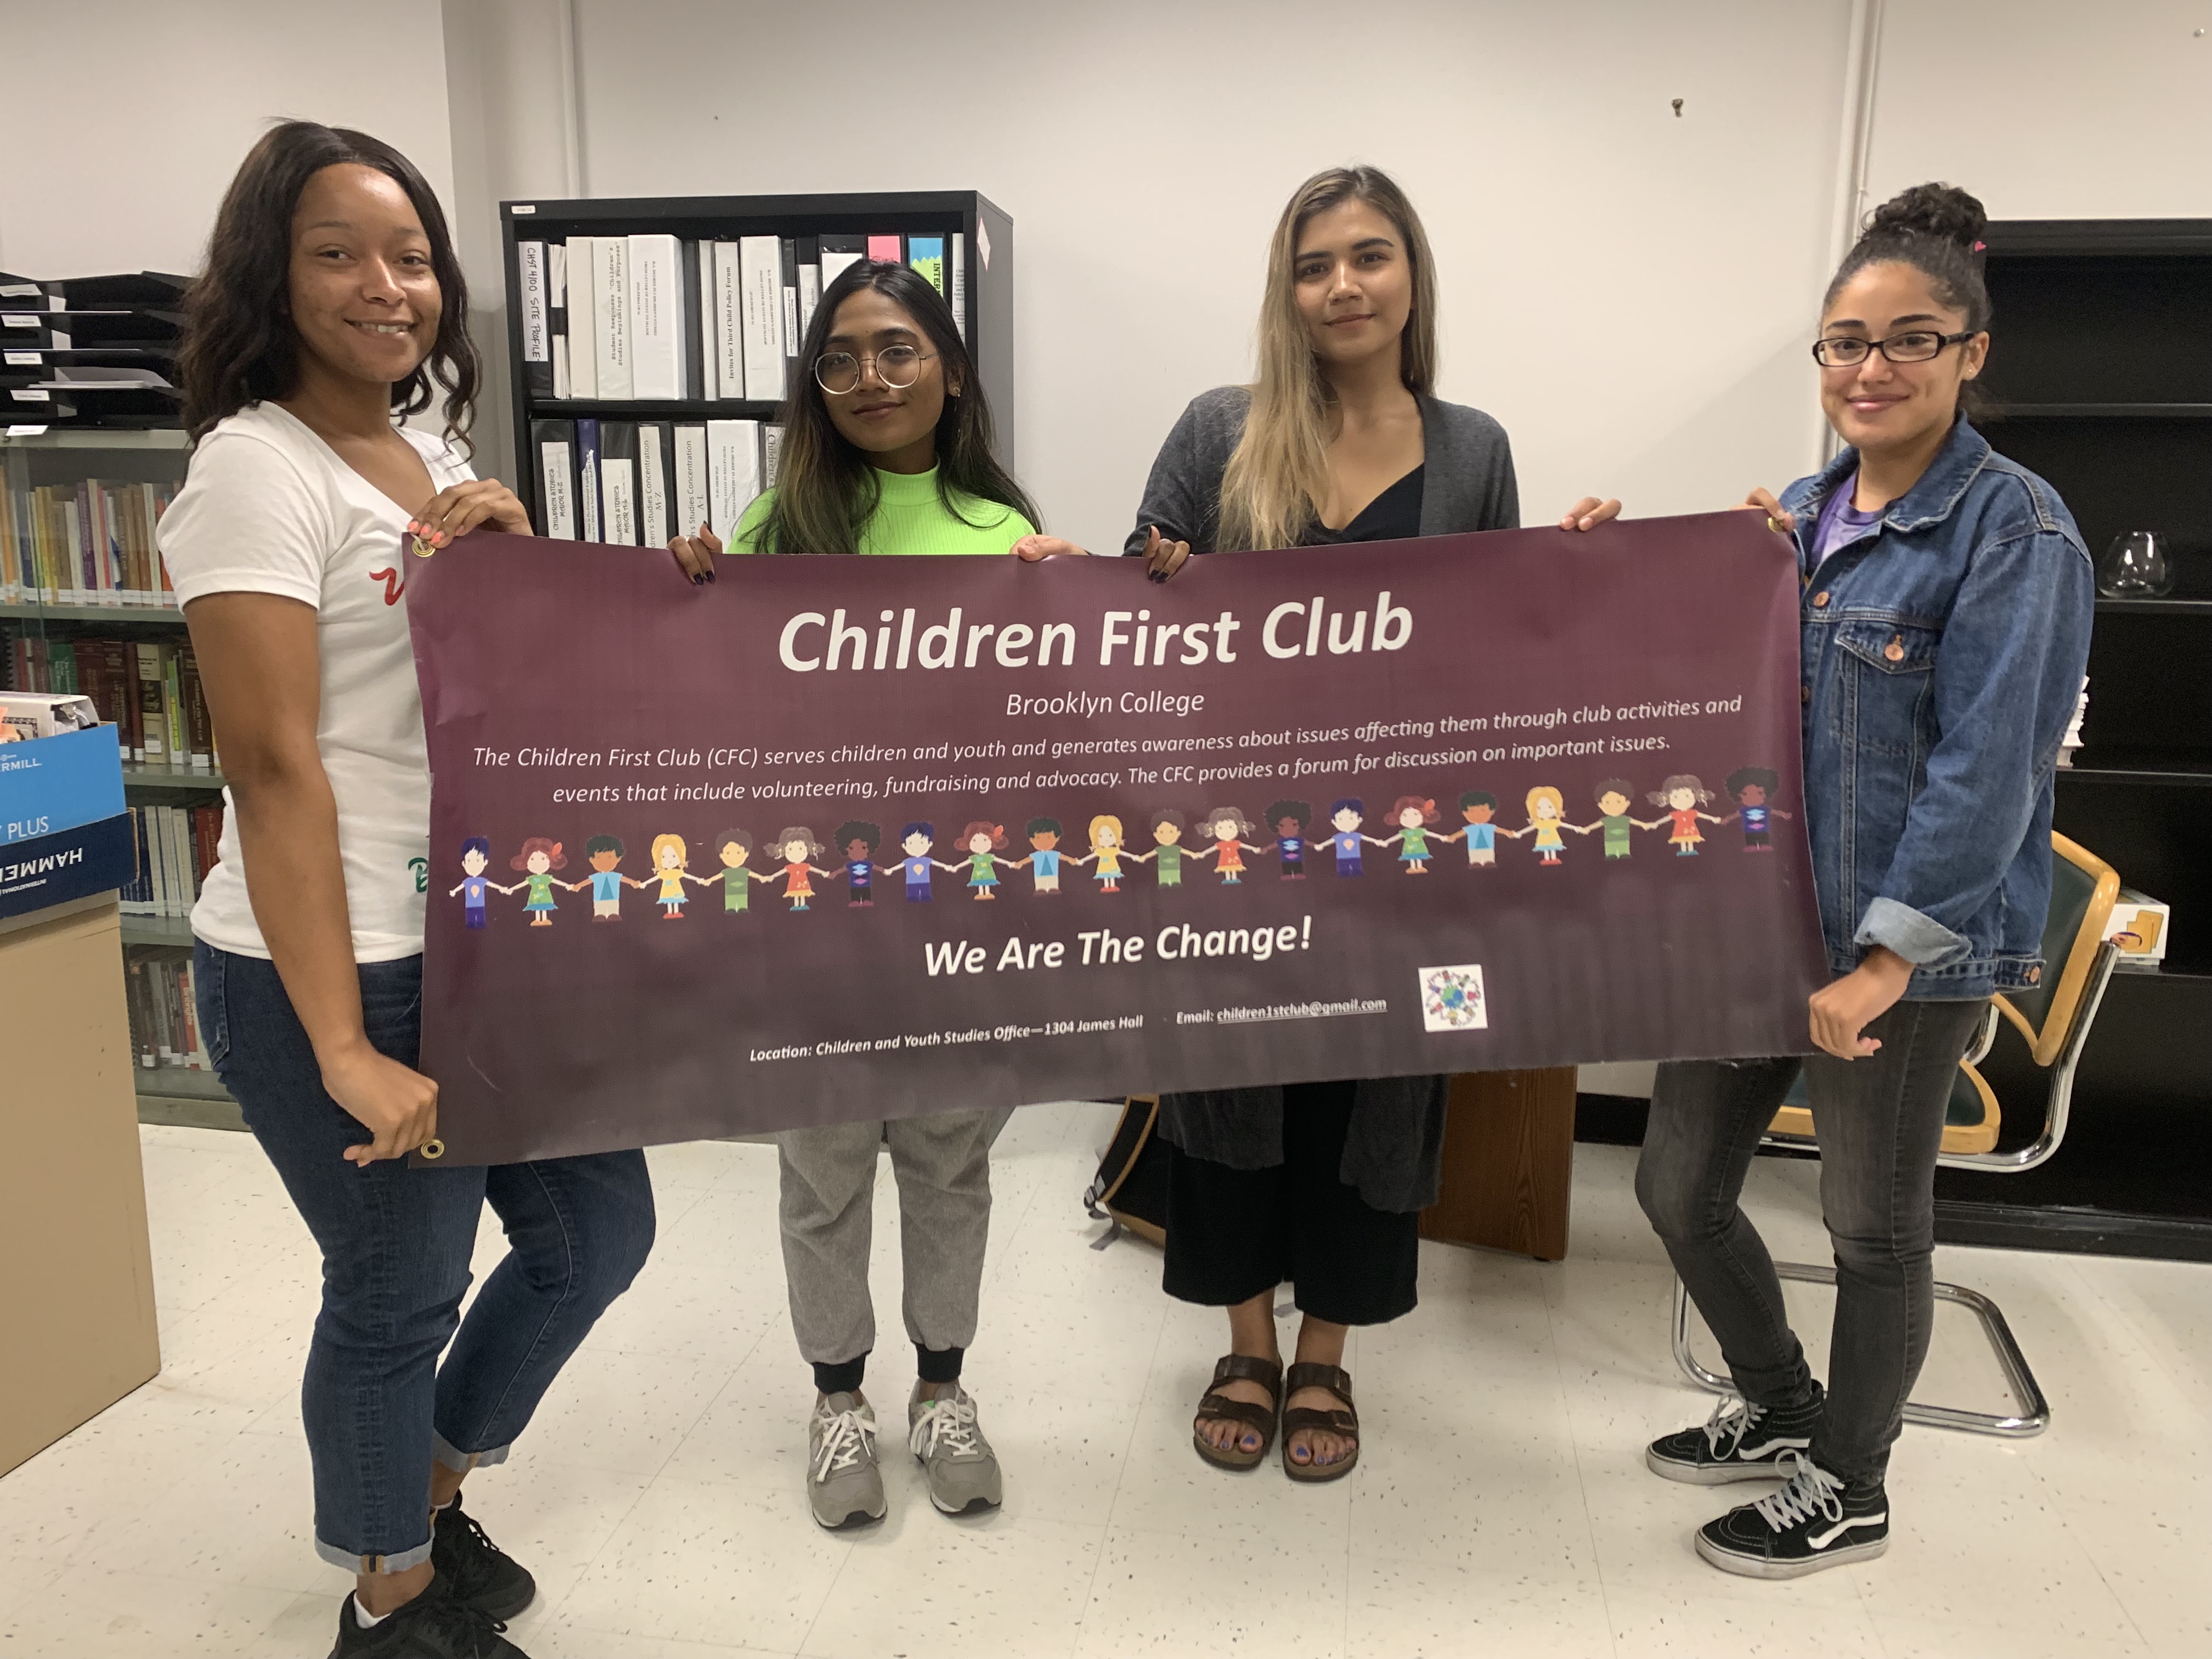 Children First Club Members: Zekiiyah (Vice President & Club Connector), Parapar (Treasurer), Dayana (President), and Jacqueline (Secretary)